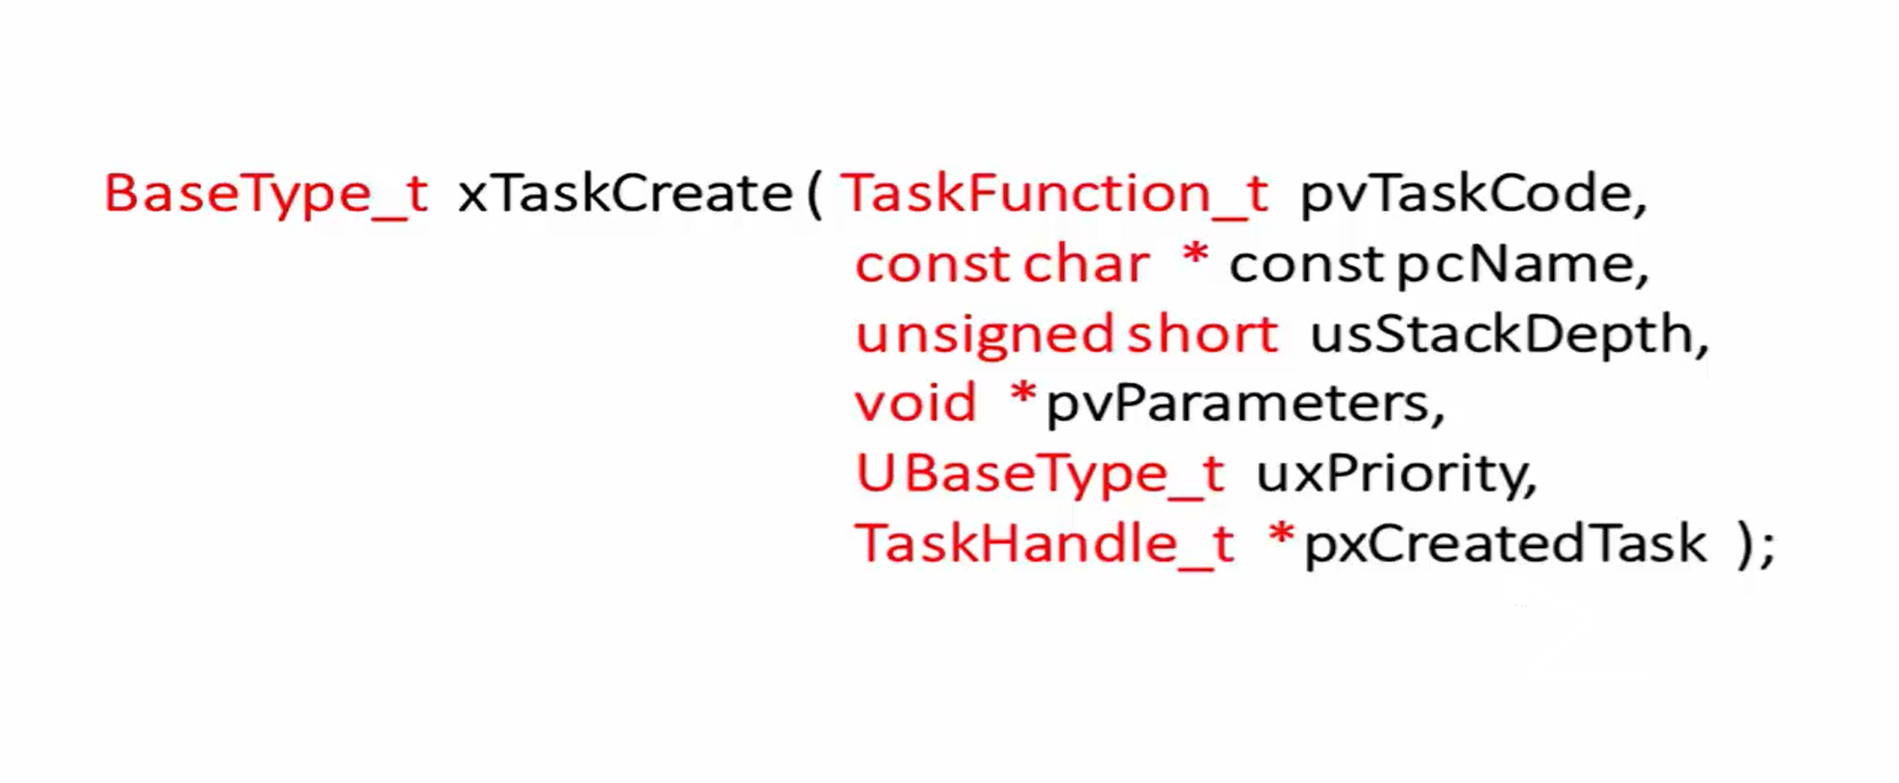 Syntax of xTaskCreate API